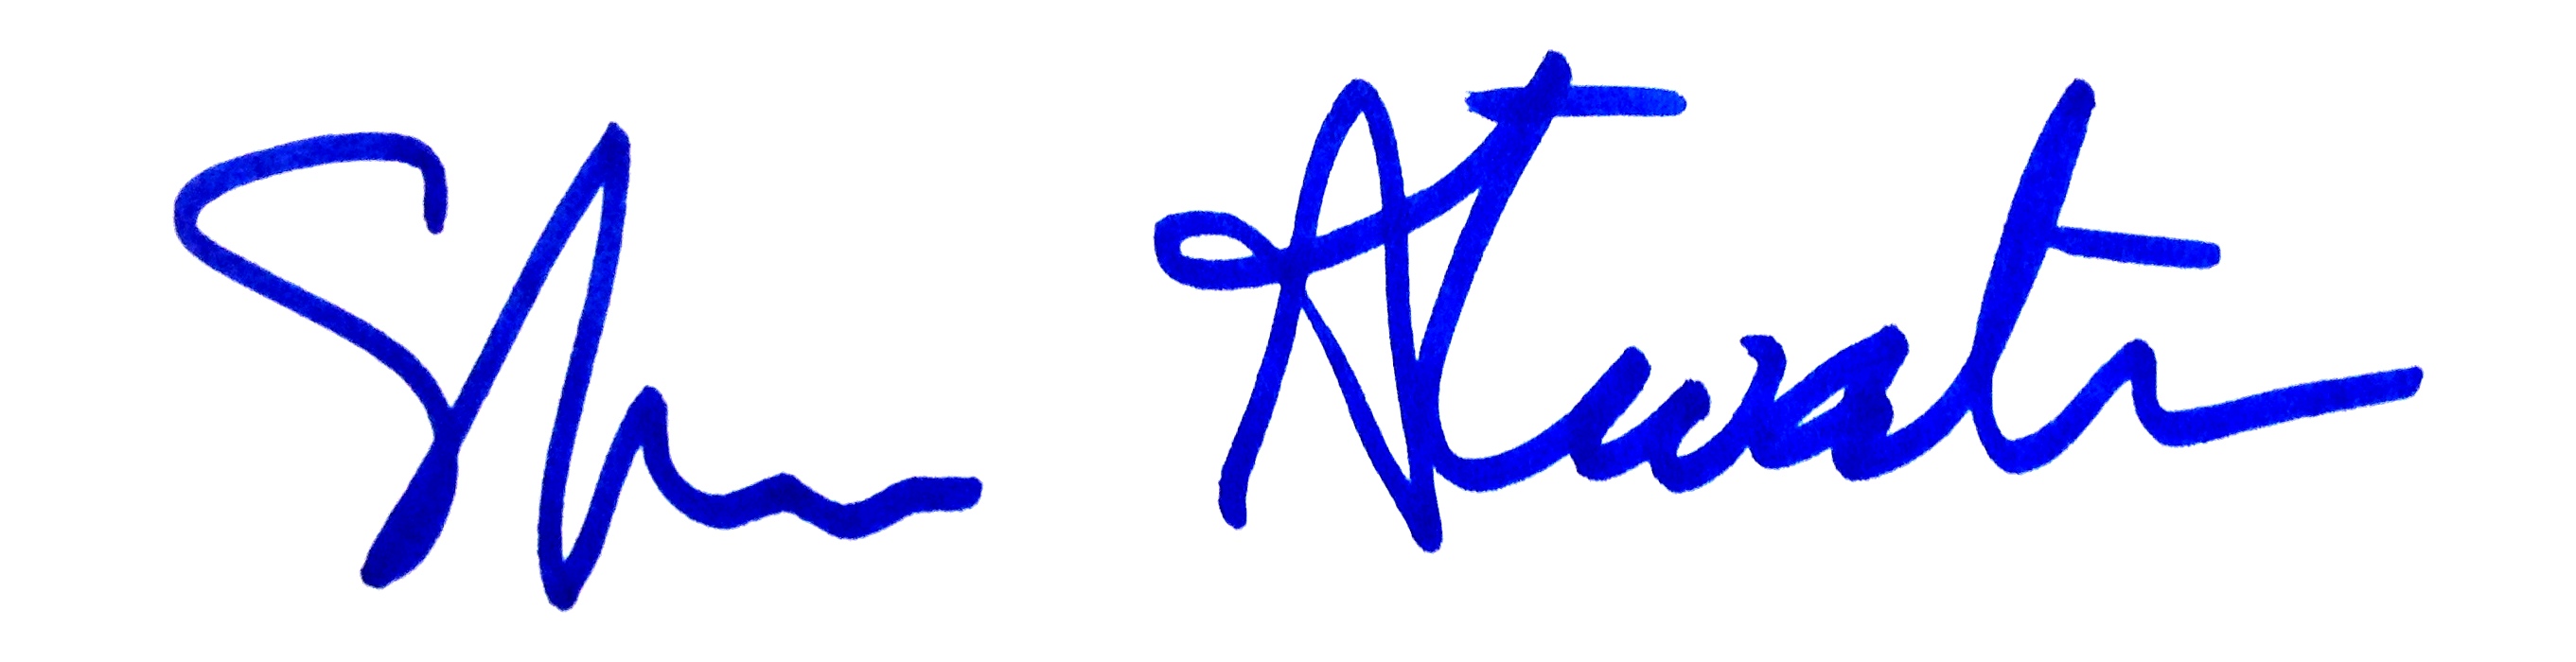 Steve Atwater Signature